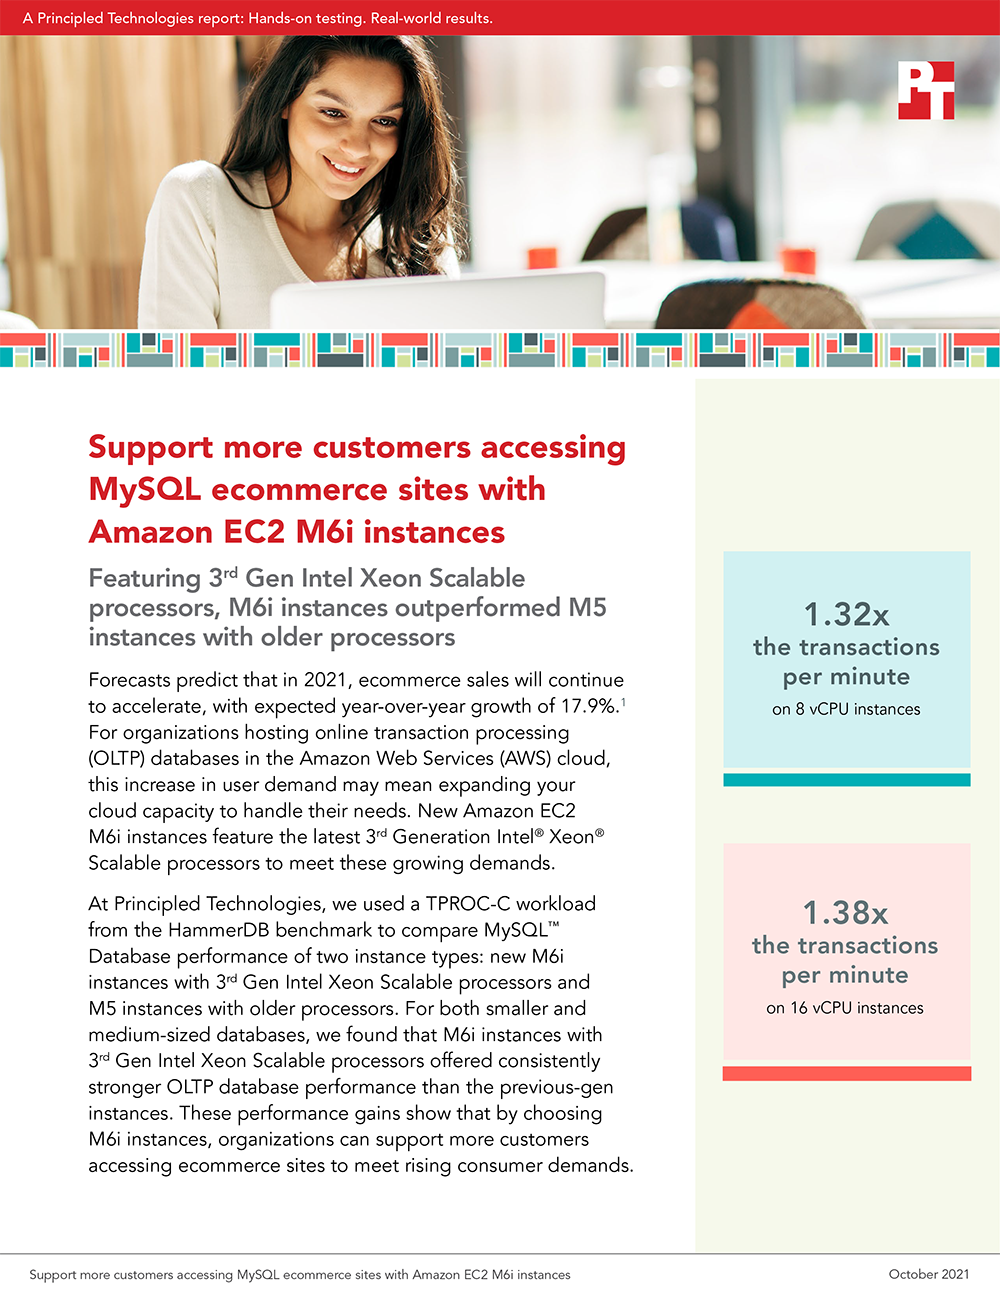 Principled Technologies Releases Study Comparing MySQL Performance of AWS EC2 M6i Instances vs. Older M5 Instances